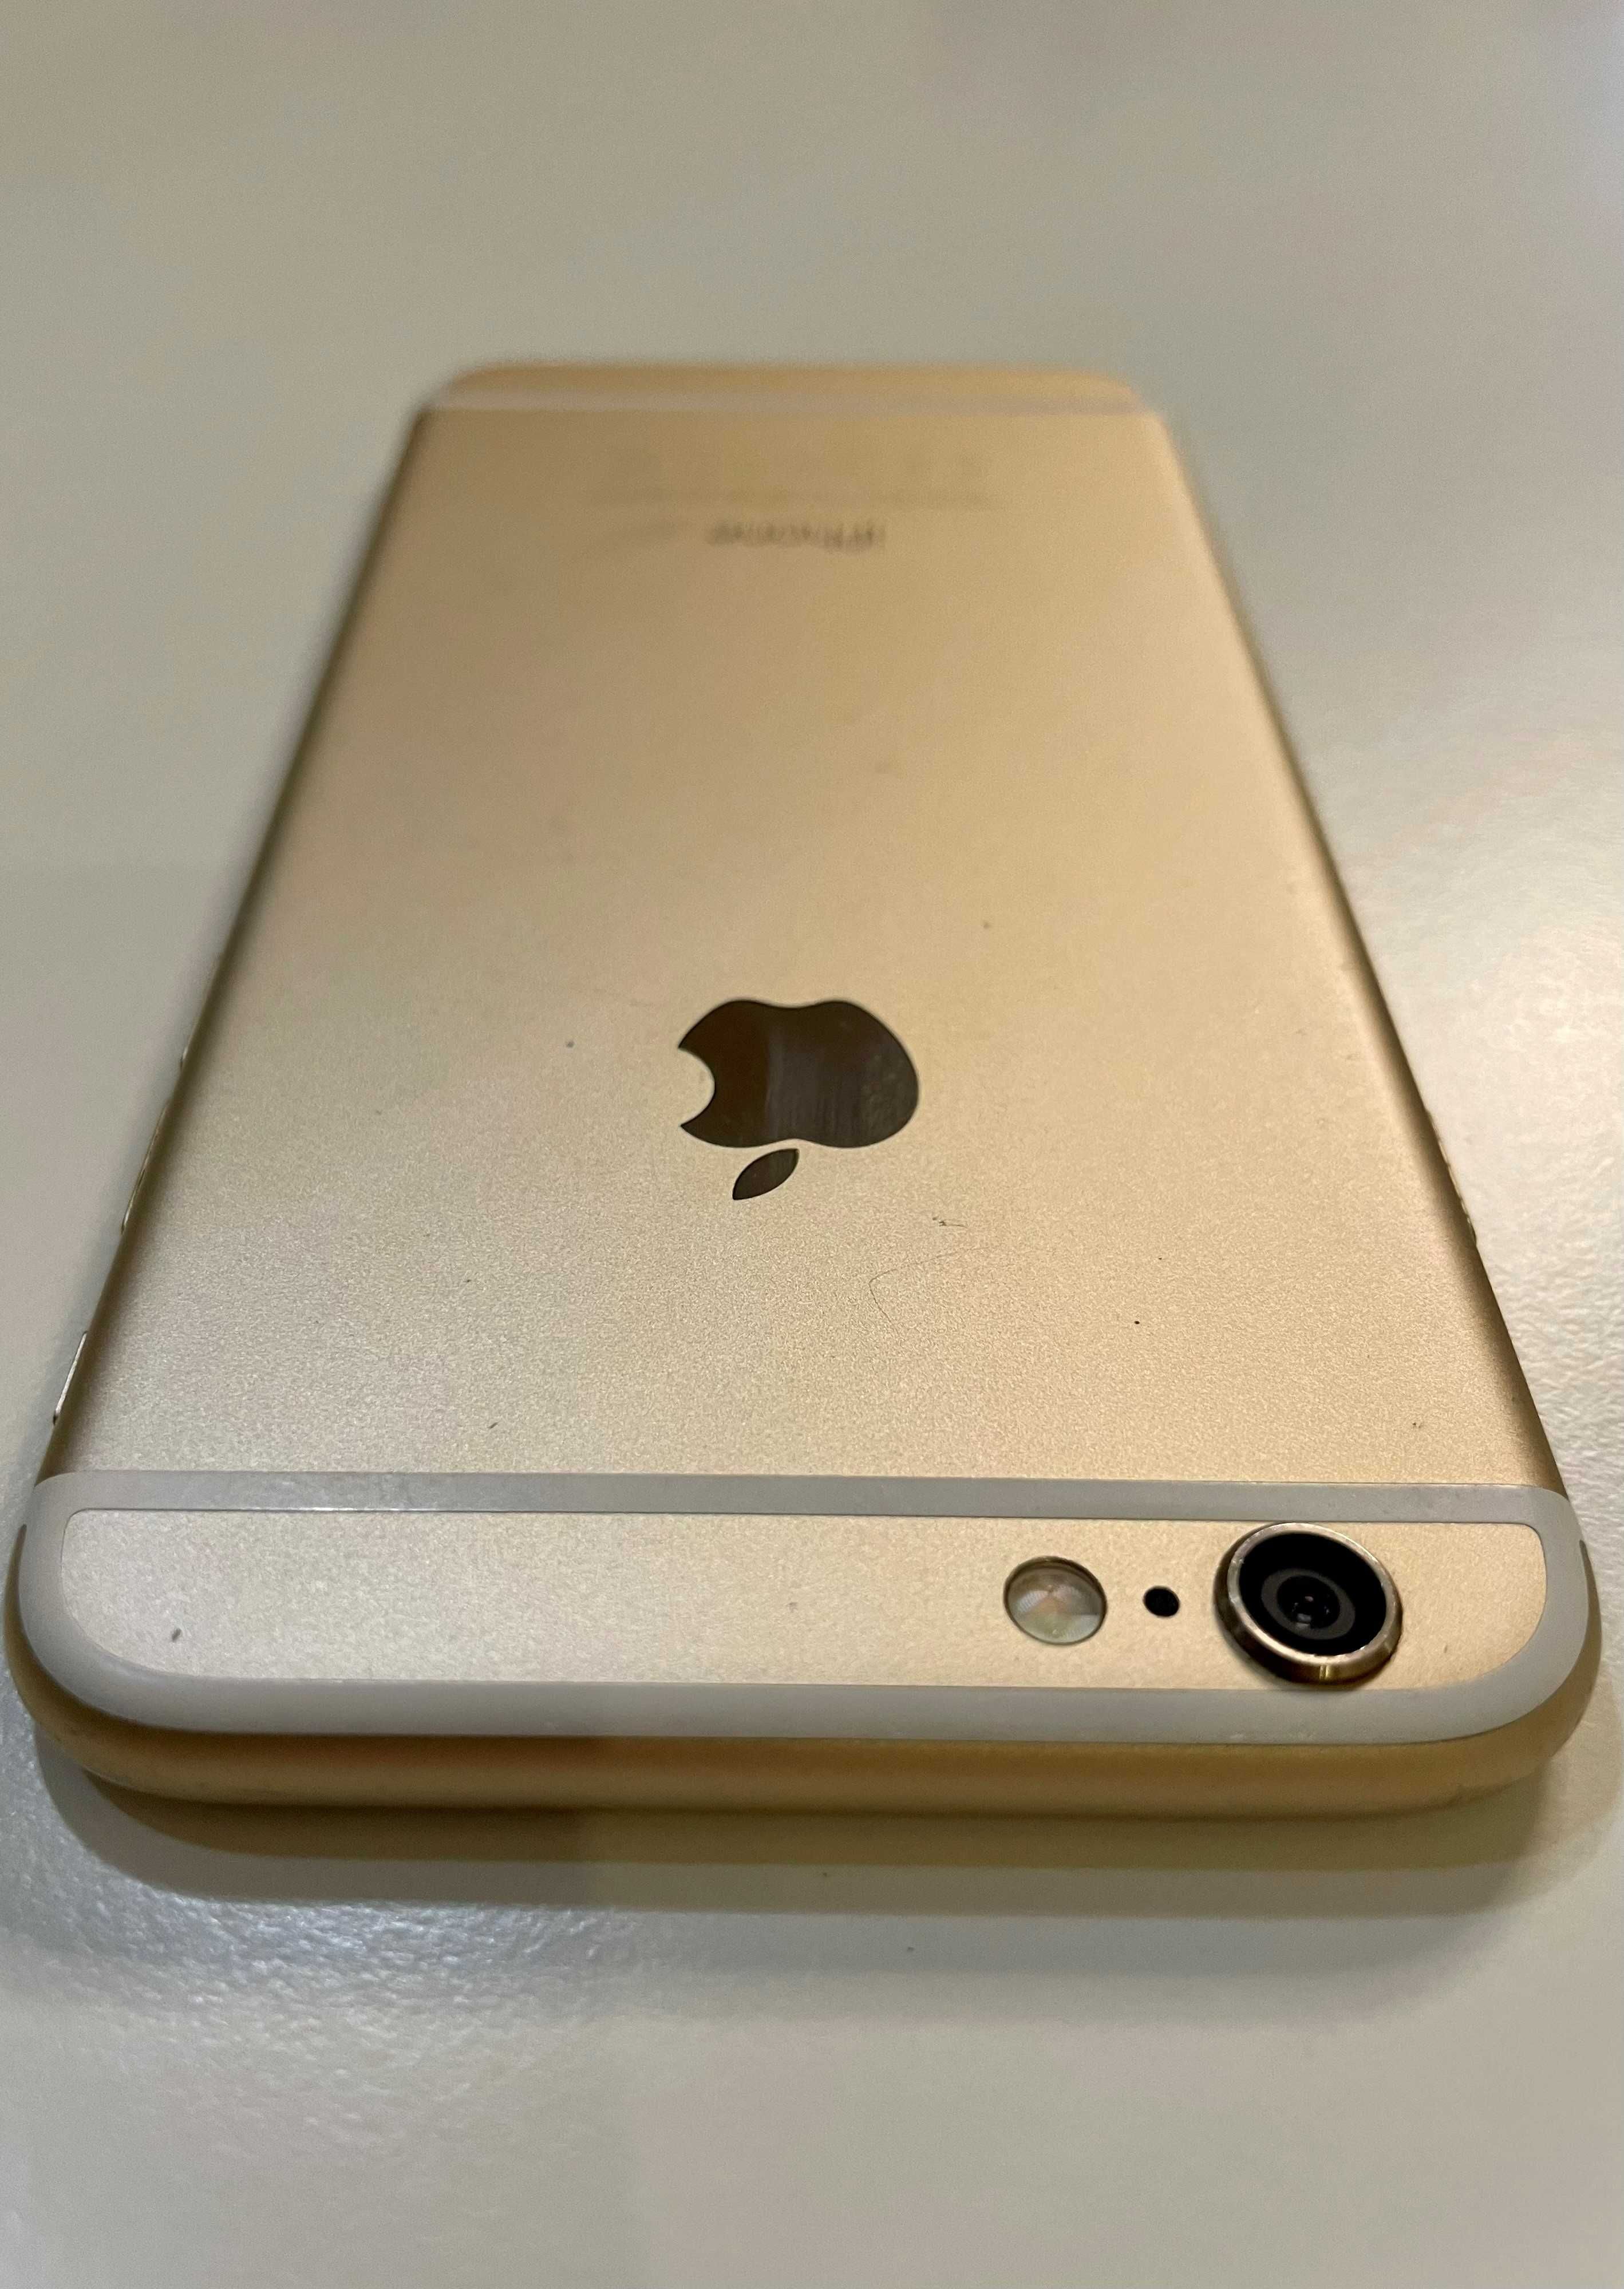 Apple iPhone 6, 16GB, rose gold